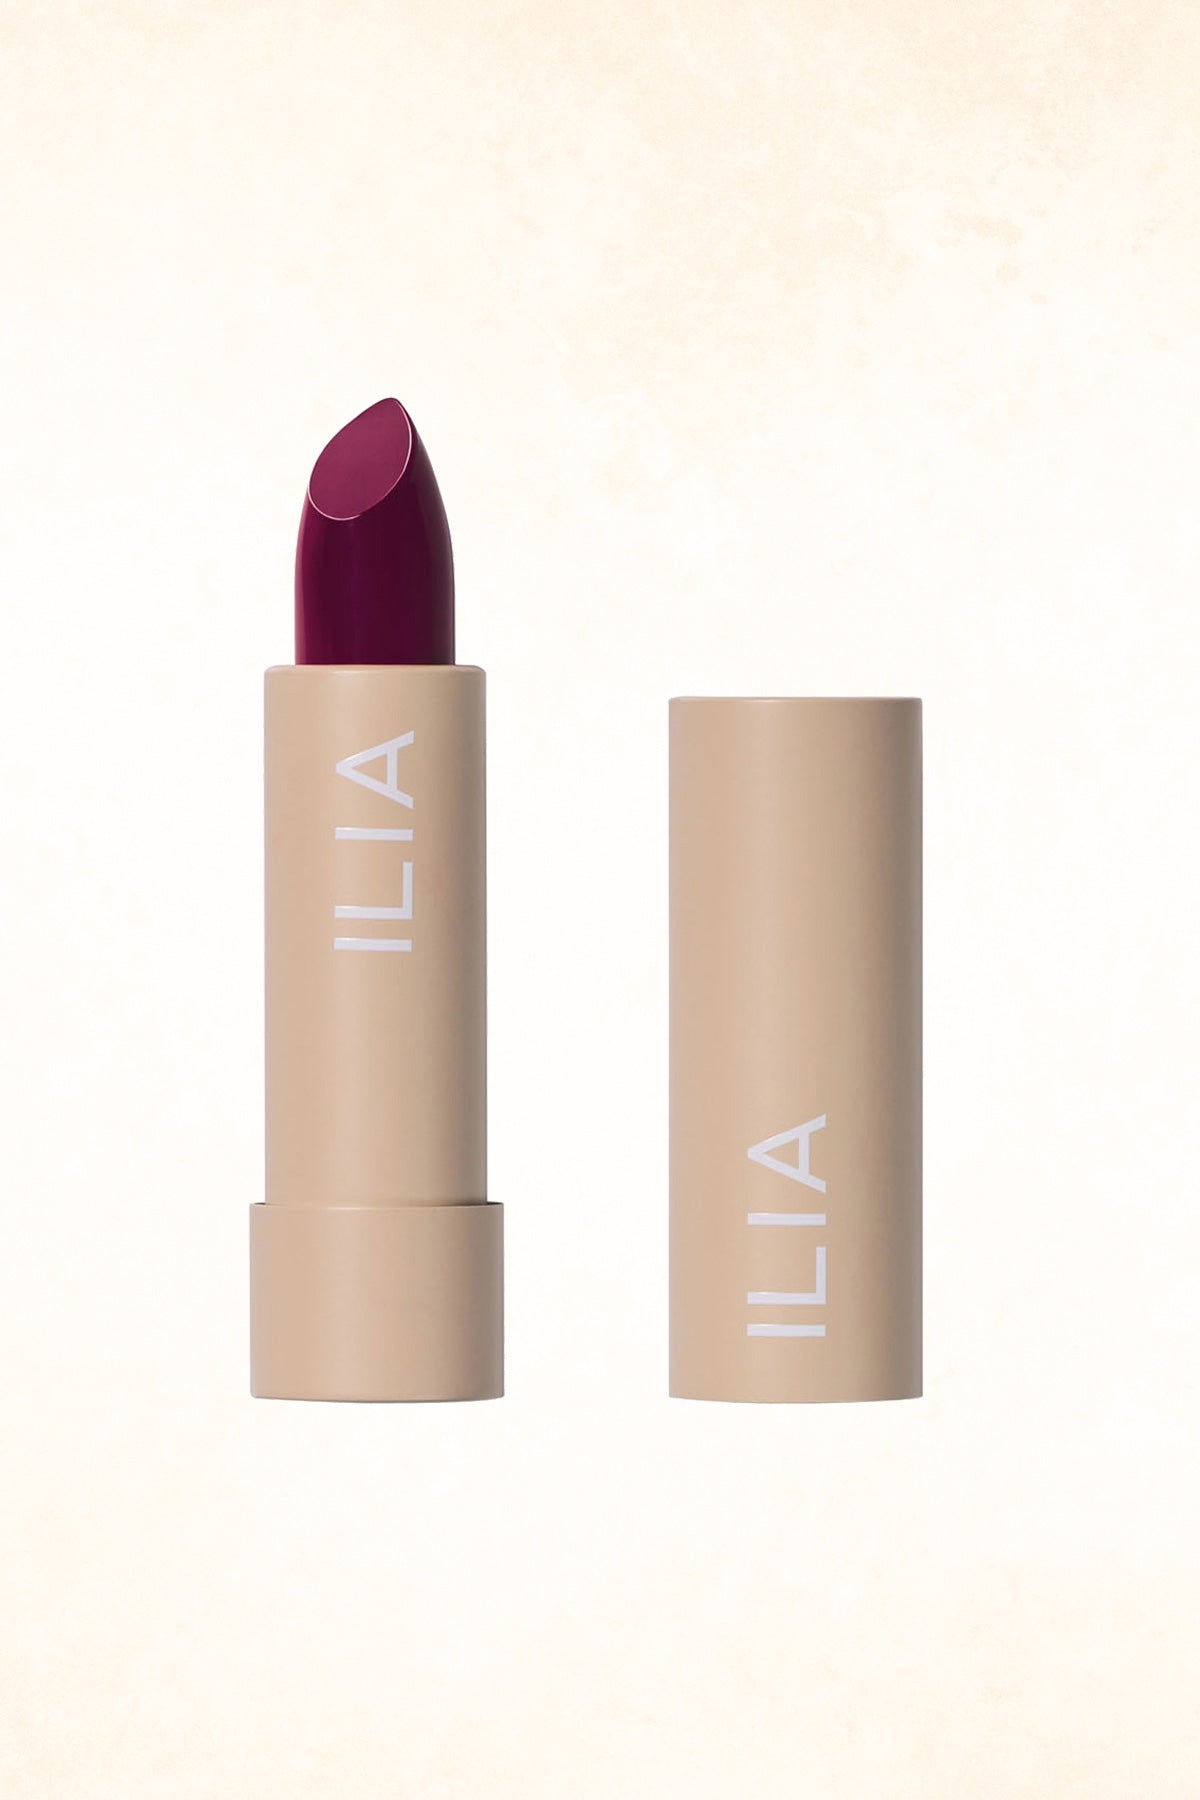 ILIA - Color Block High Impact Lipstick - Ultra Violet - 4 g